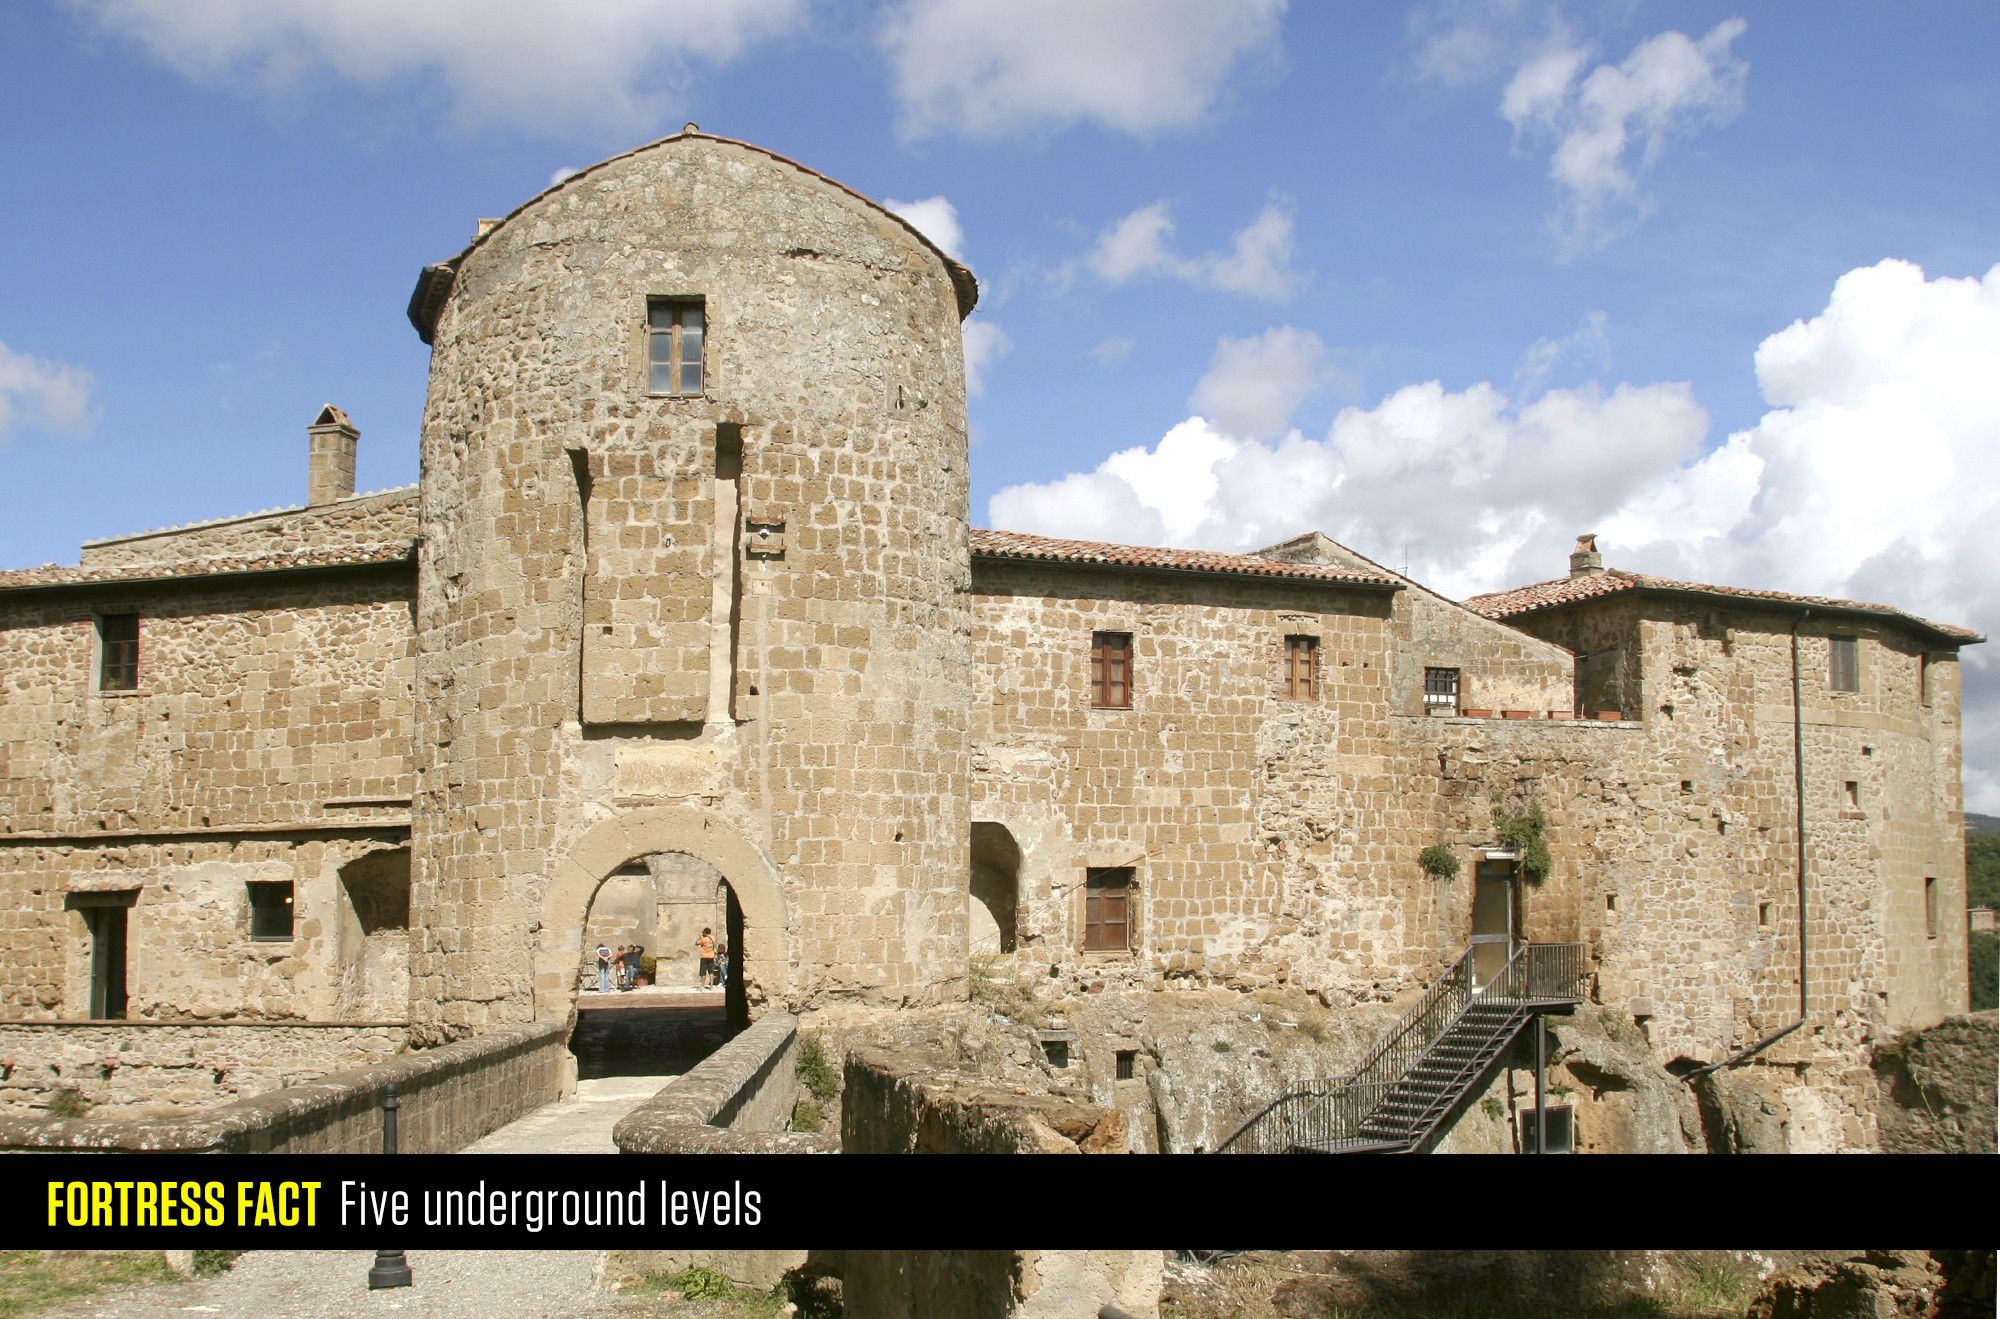 The World's 30 Most Impressive Fortresses